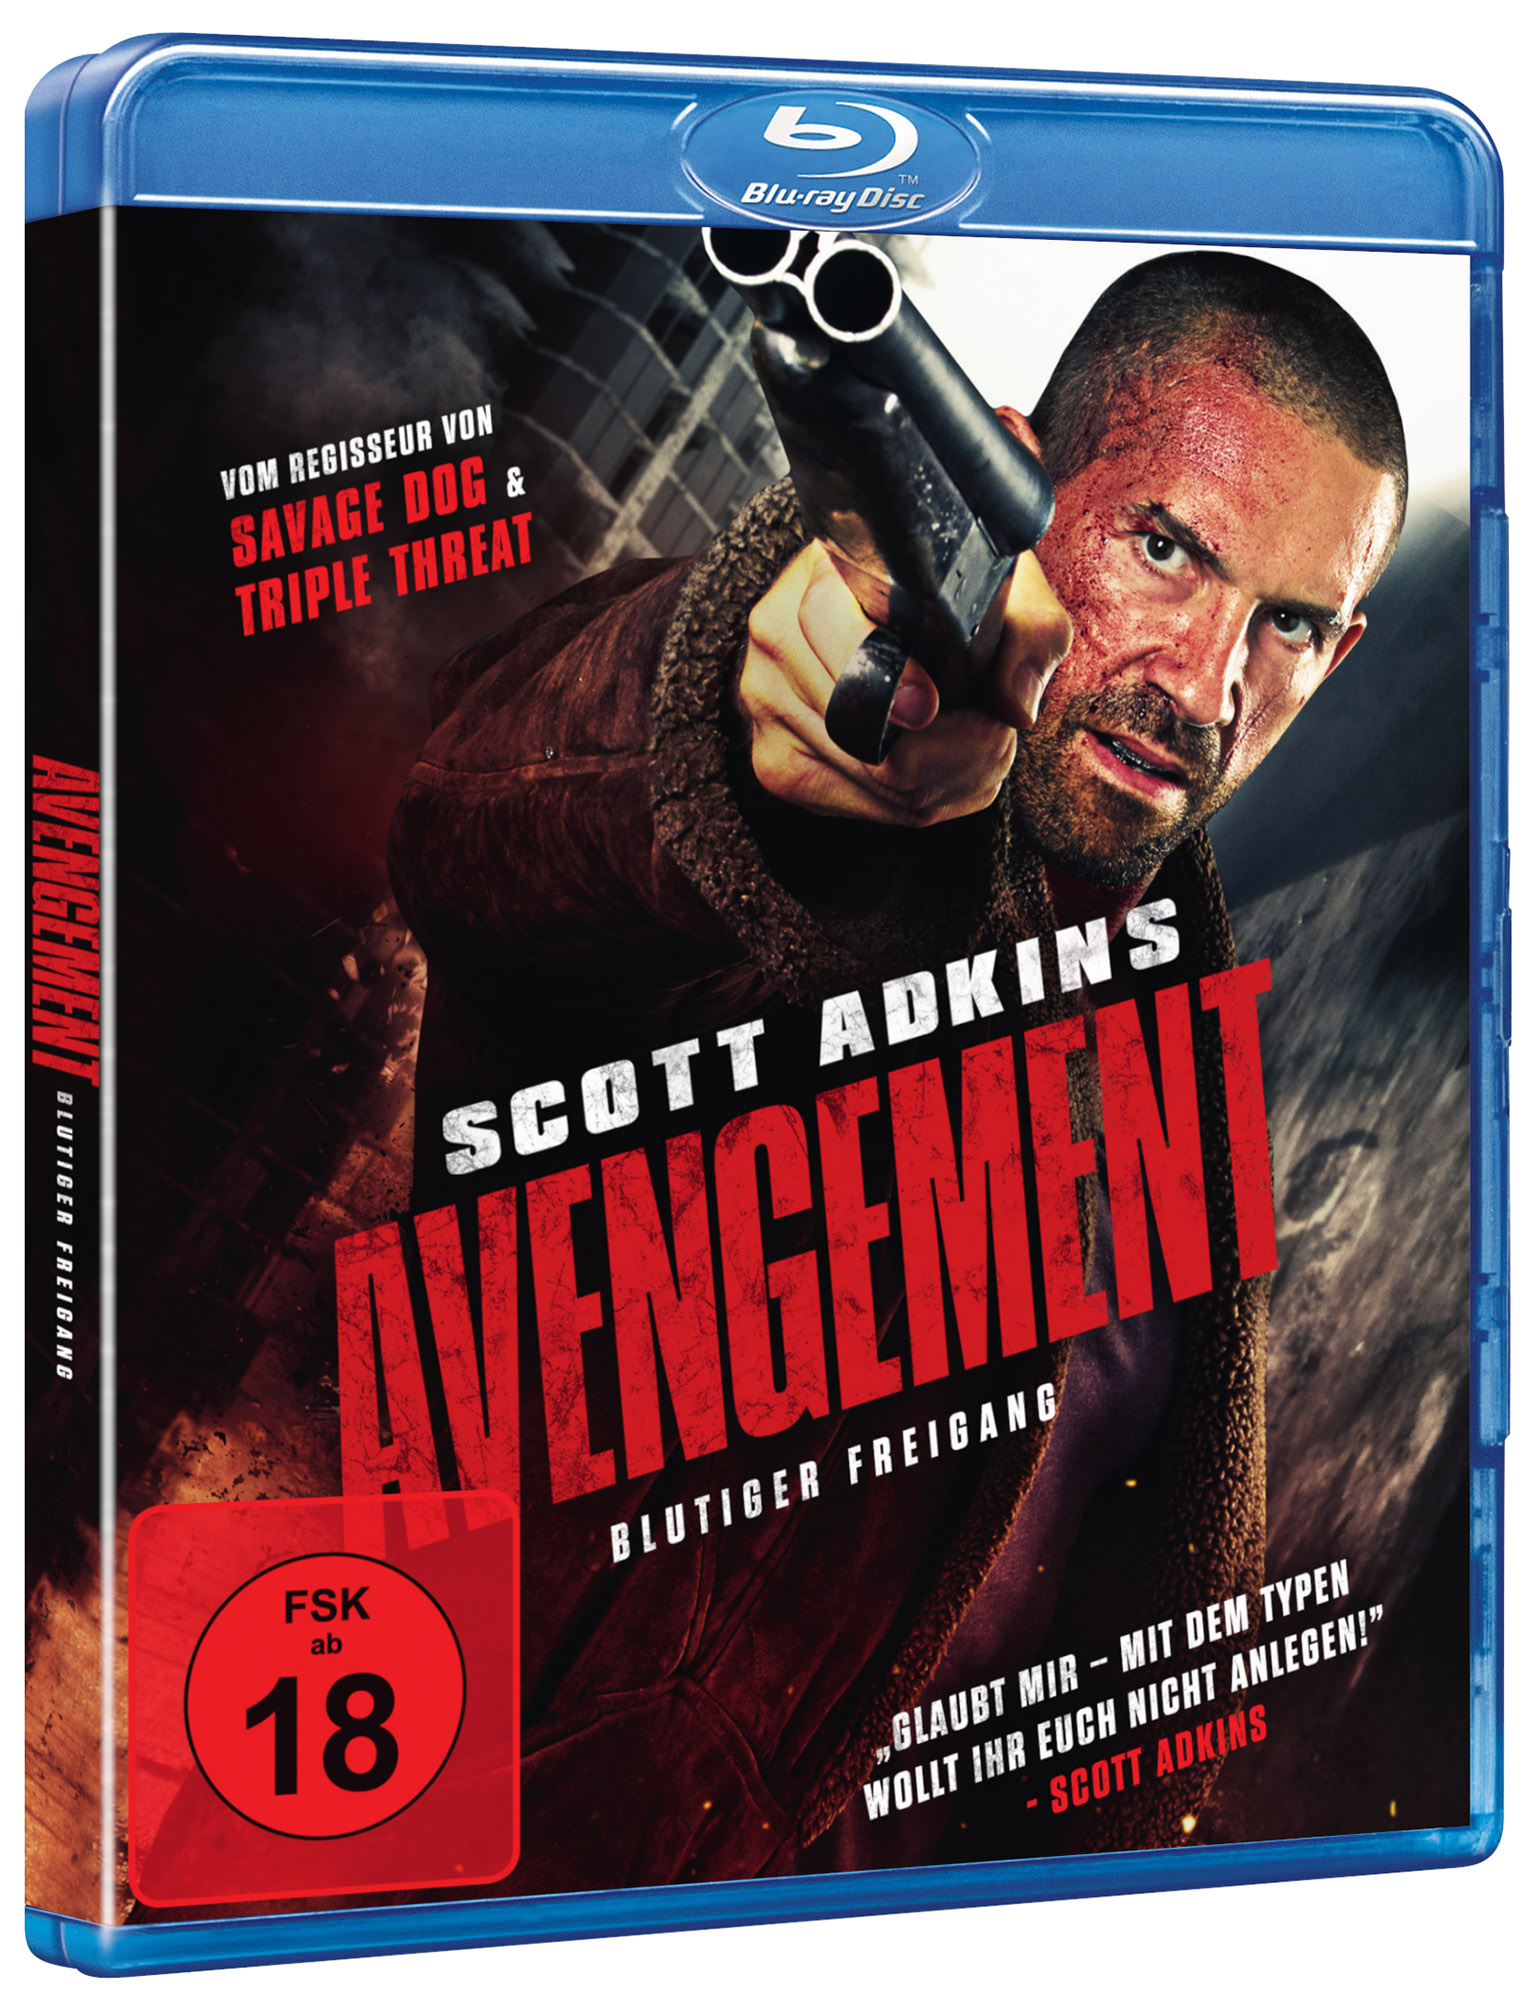 Avengement (Blu-ray)  Image 2